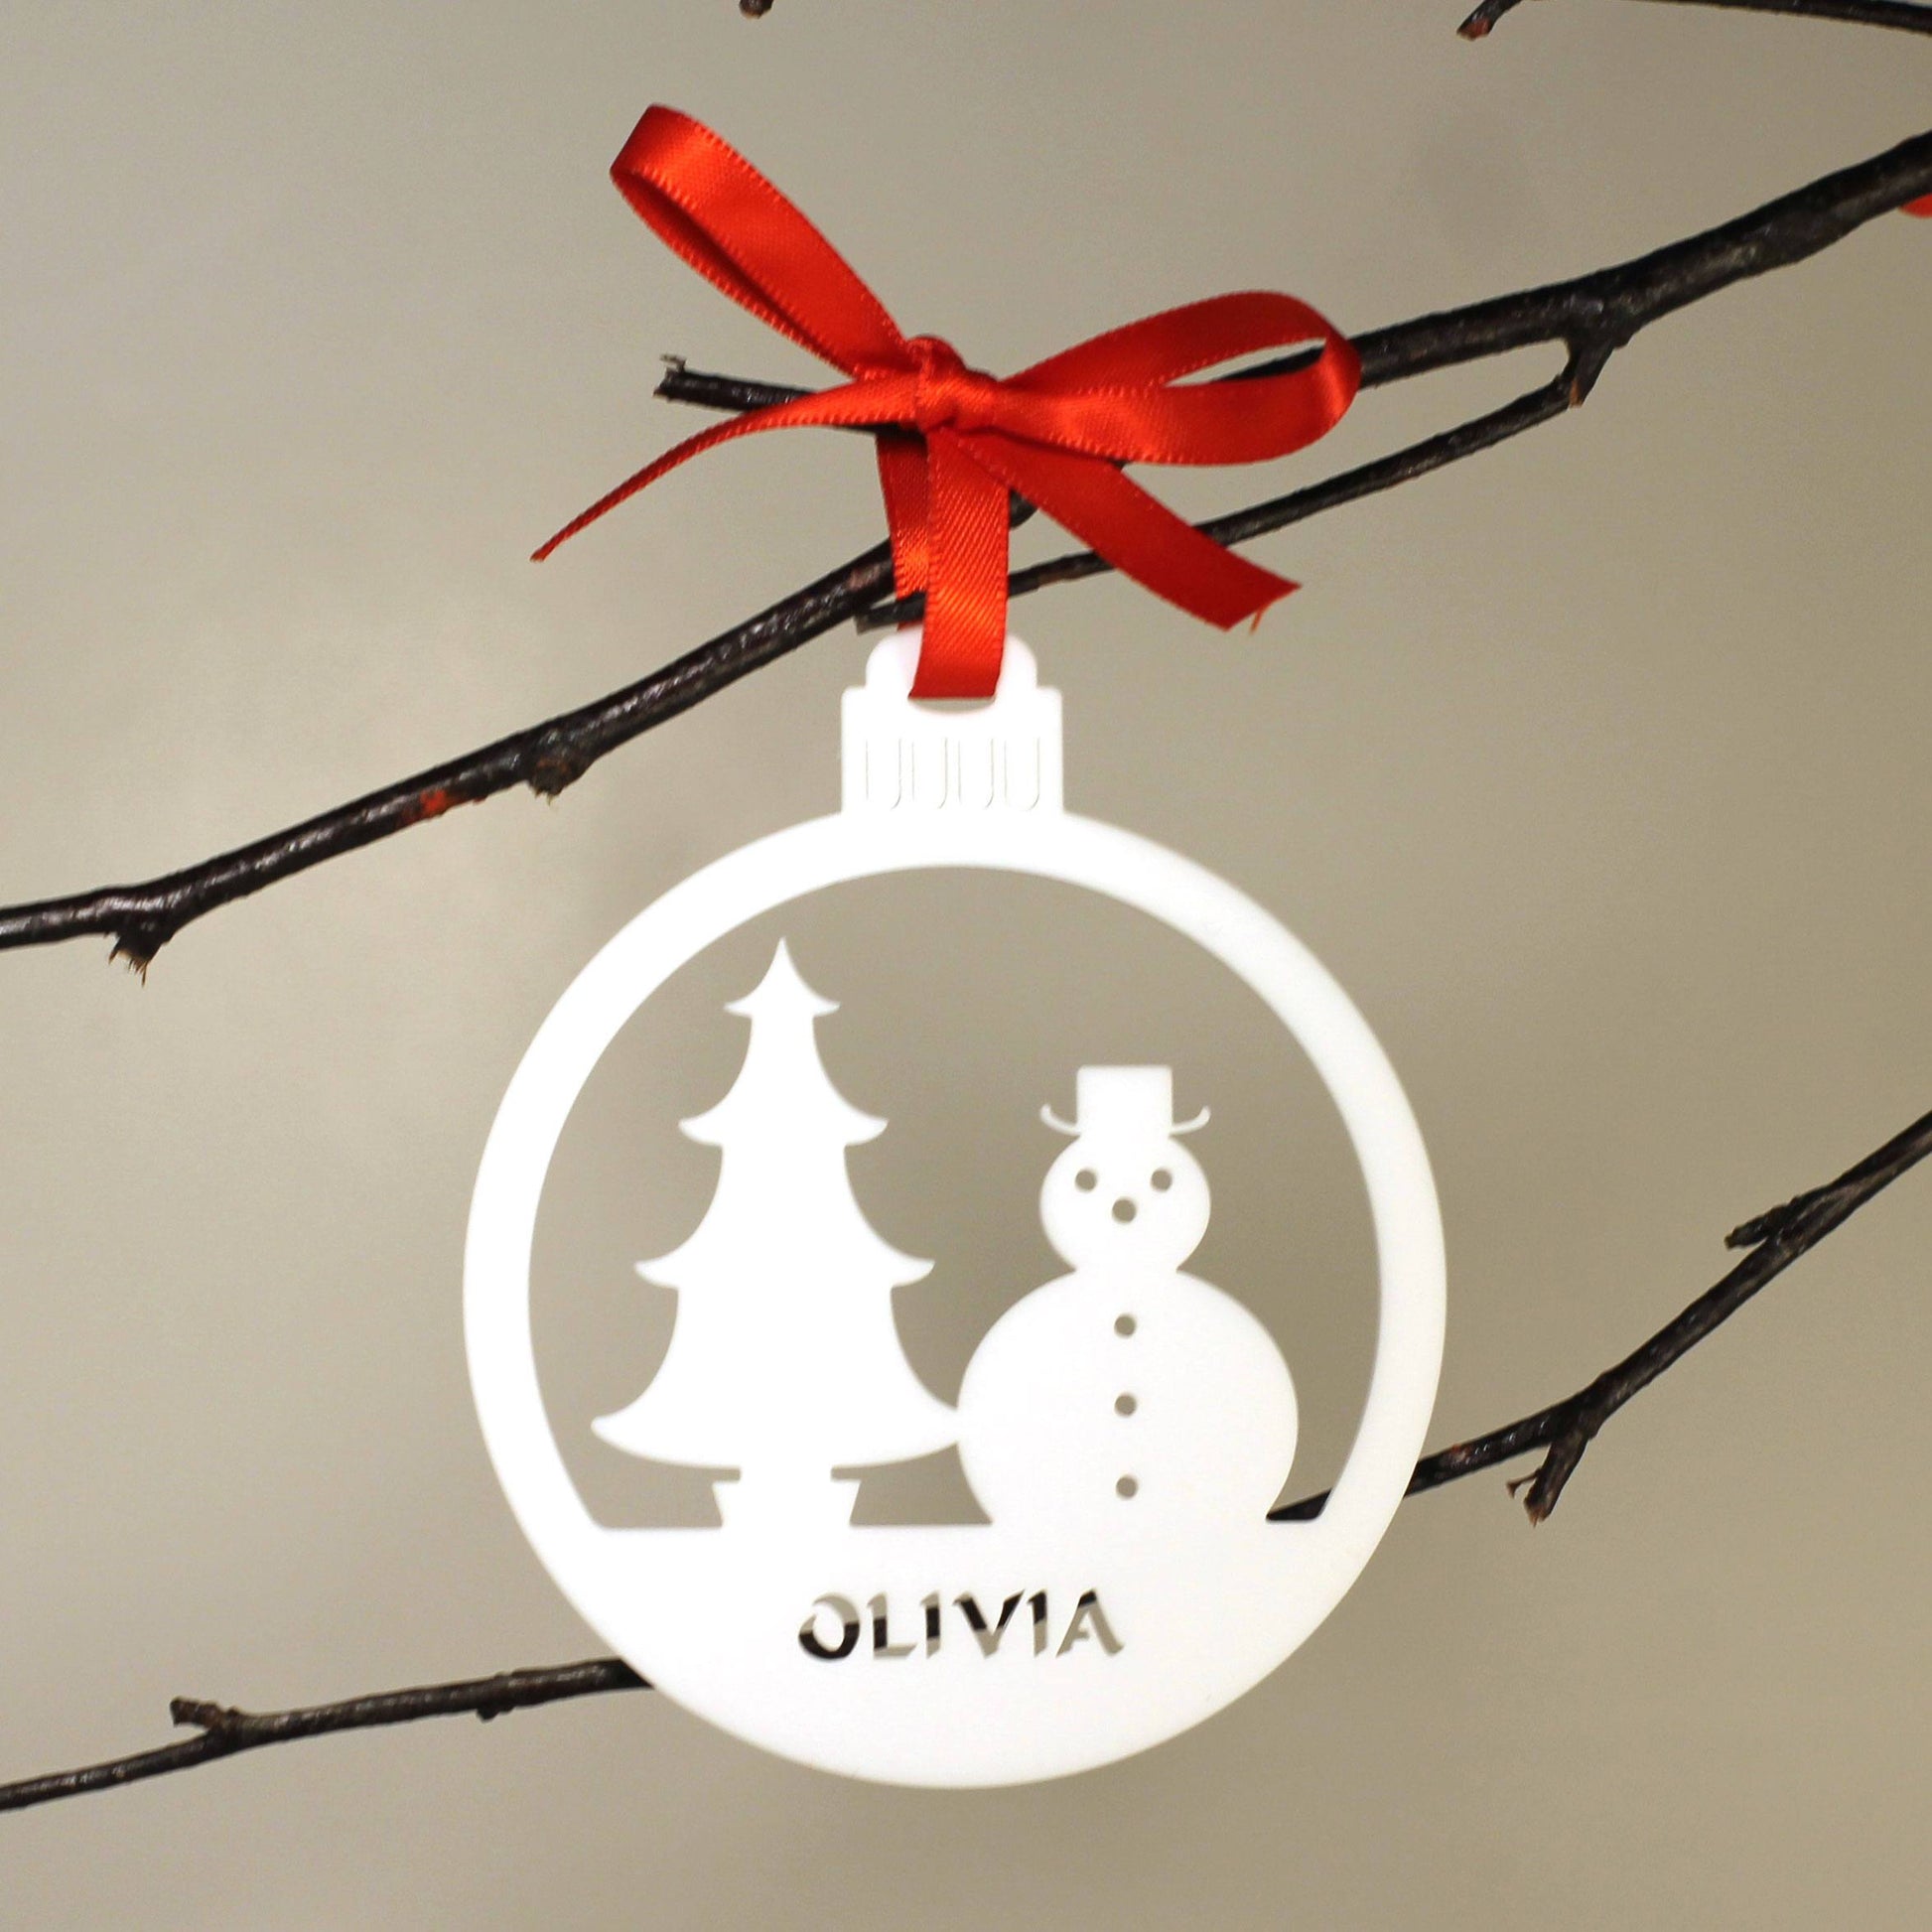 Personalised Custom White Snowman Christmas Tree Bauble Festive Decoration Ornament Decorations Best Personalise Name Handmade Xmas .o. - DirectlyPersonalised